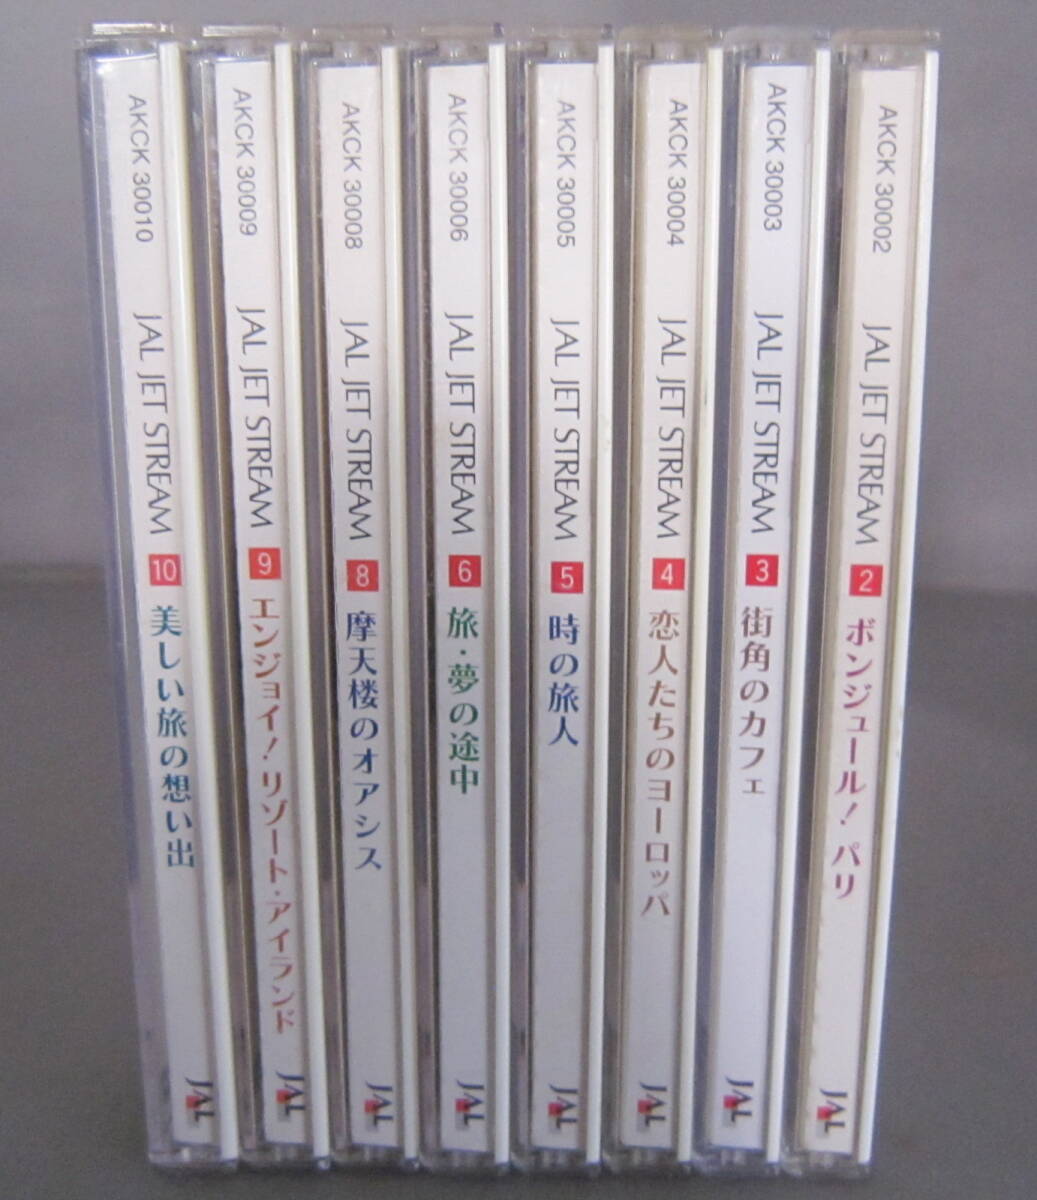 CD JAL JET STREAM/ jet Stream Romantic Cruising/ роман tik* cruising 8 шт. комплект замок .. бесплатная доставка 